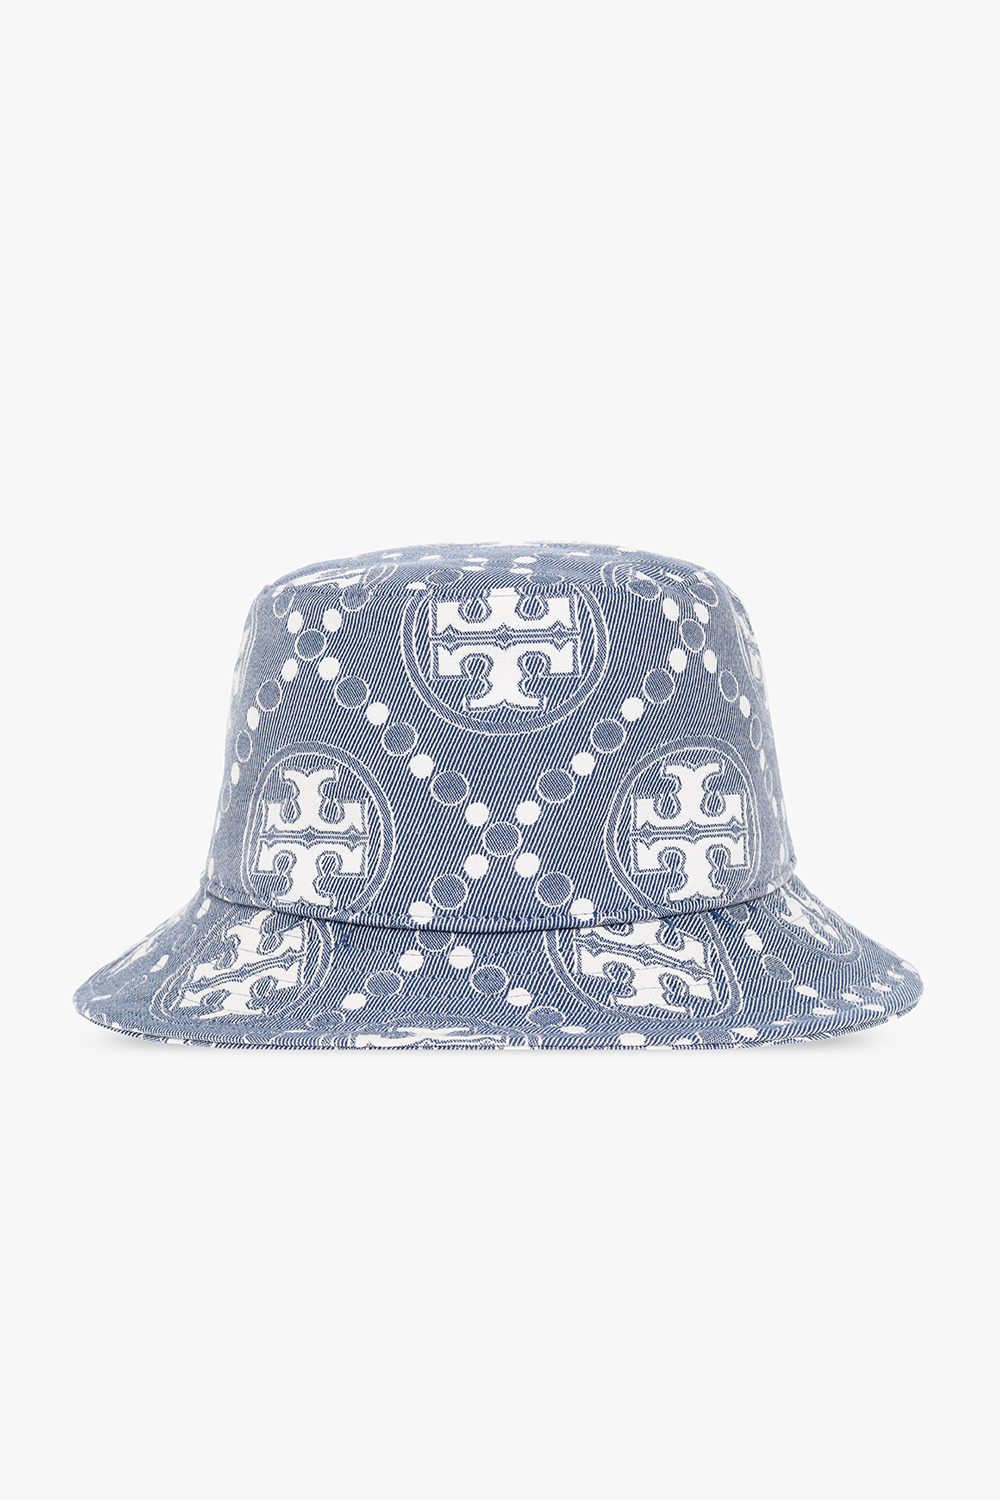 InteragencyboardShops Japan - Blue Salker Hat Beanie Uomo nero Tory Burch -  New Era Chicago Bulls Two-Tone Snapback Hat